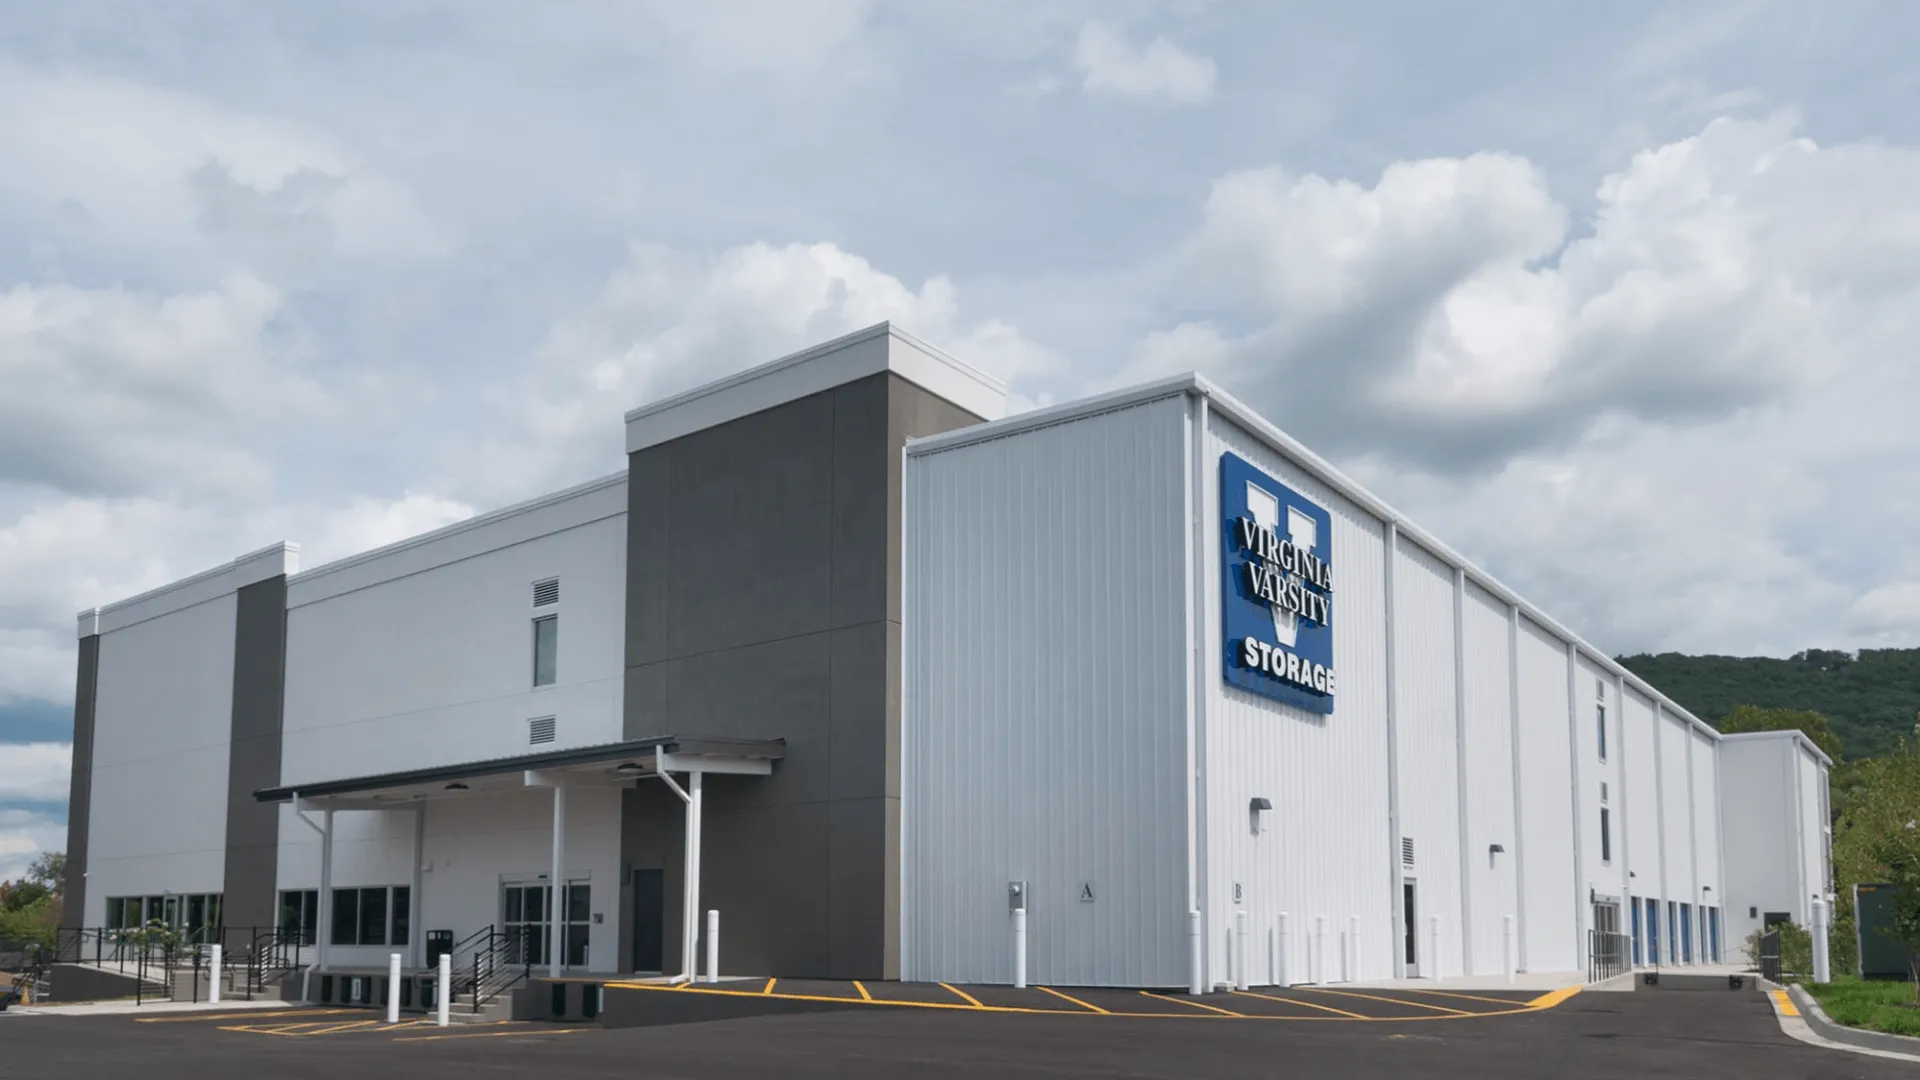 The exterior of the Virginia Varsity Storage Center in Roanoke, Virginia.